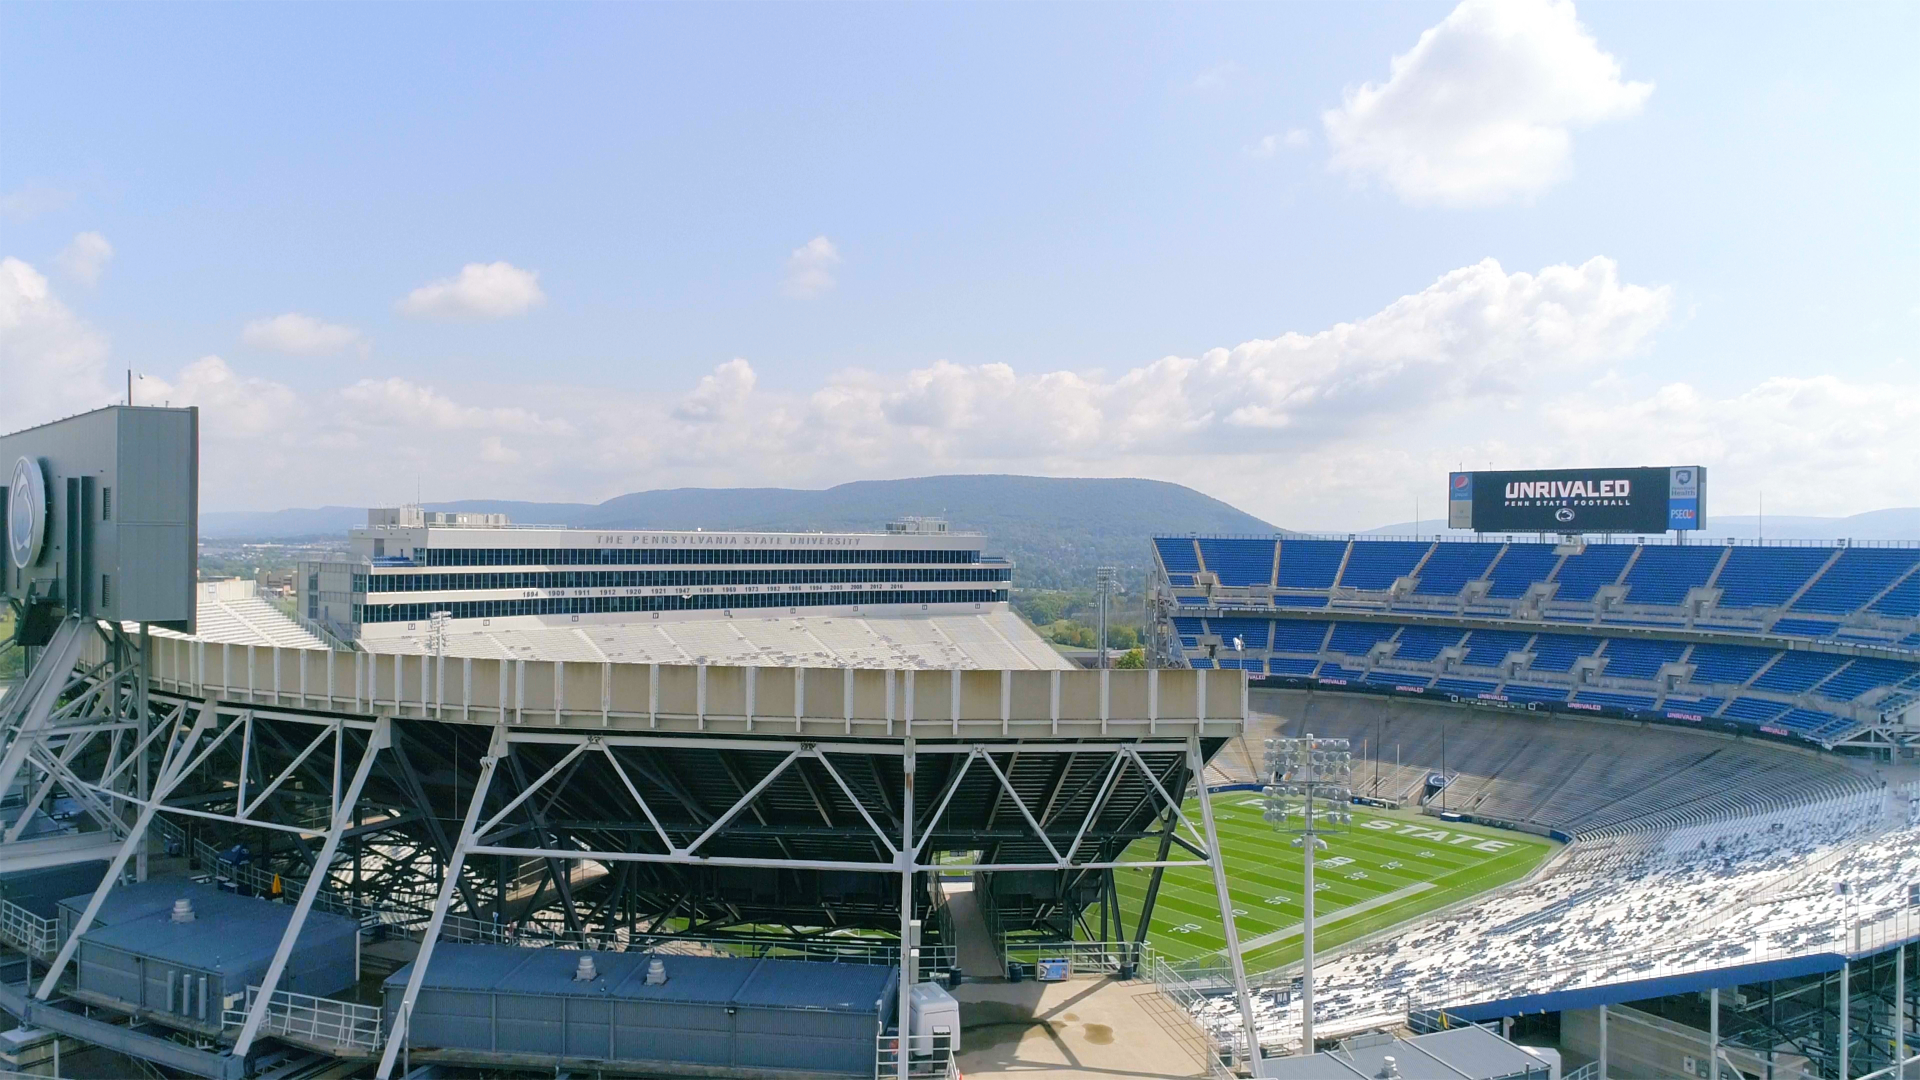 Drone Image of Beaver Stadium